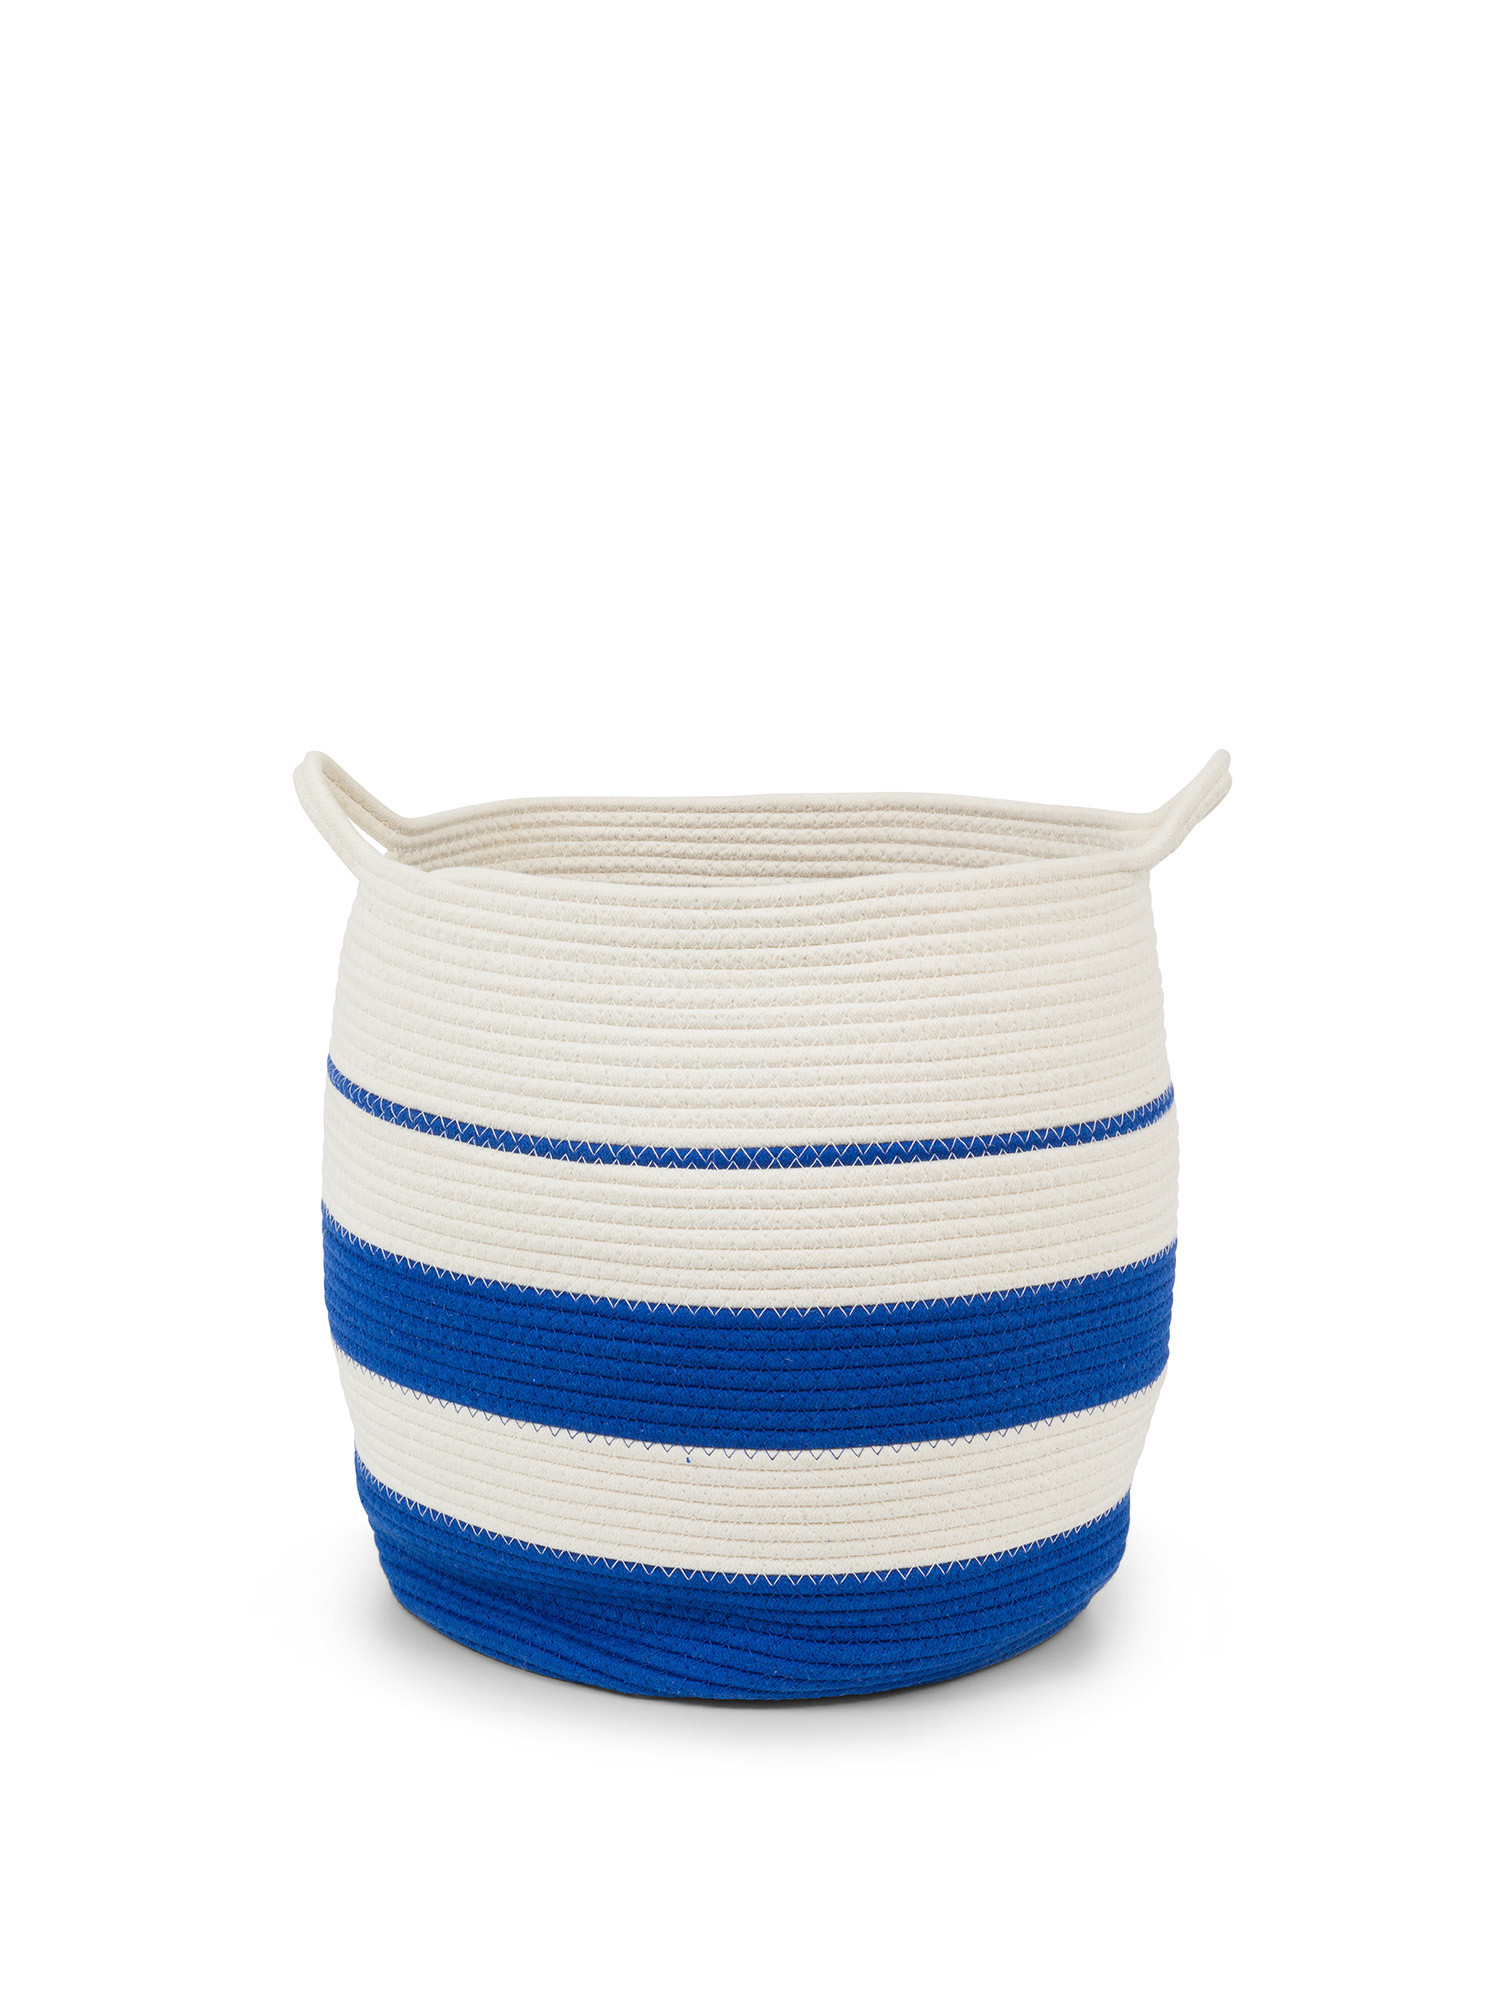 Rope basket, White / Blue, large image number 0